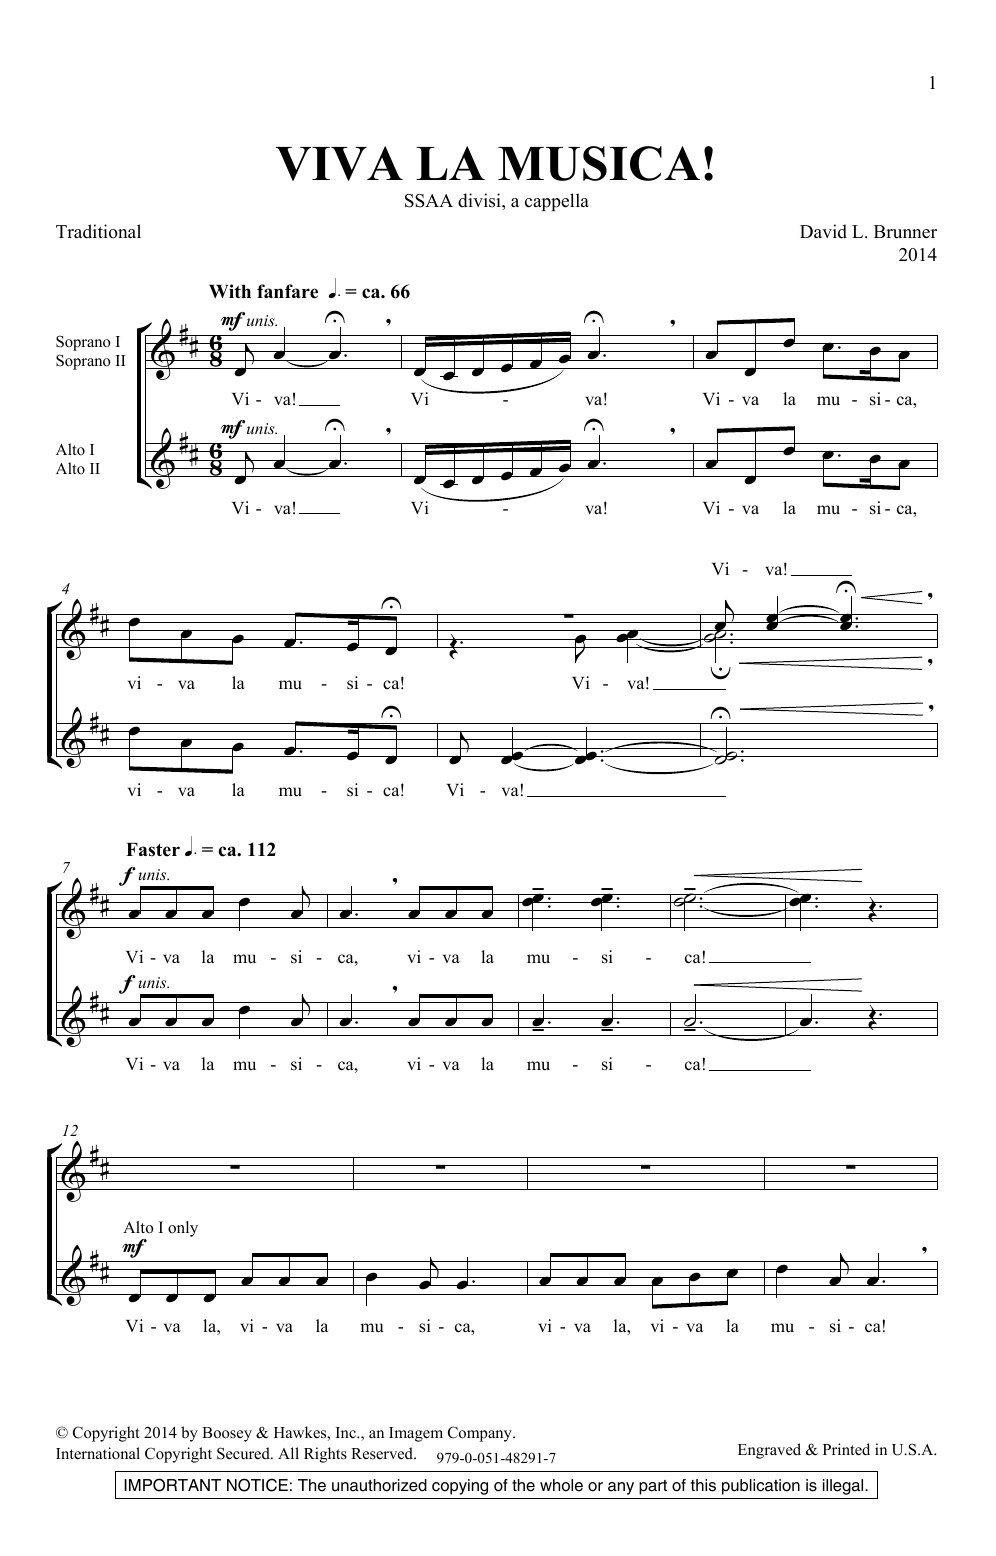 David Brunner Viva La Musica Sheet Music Notes & Chords for SSA Choir - Download or Print PDF